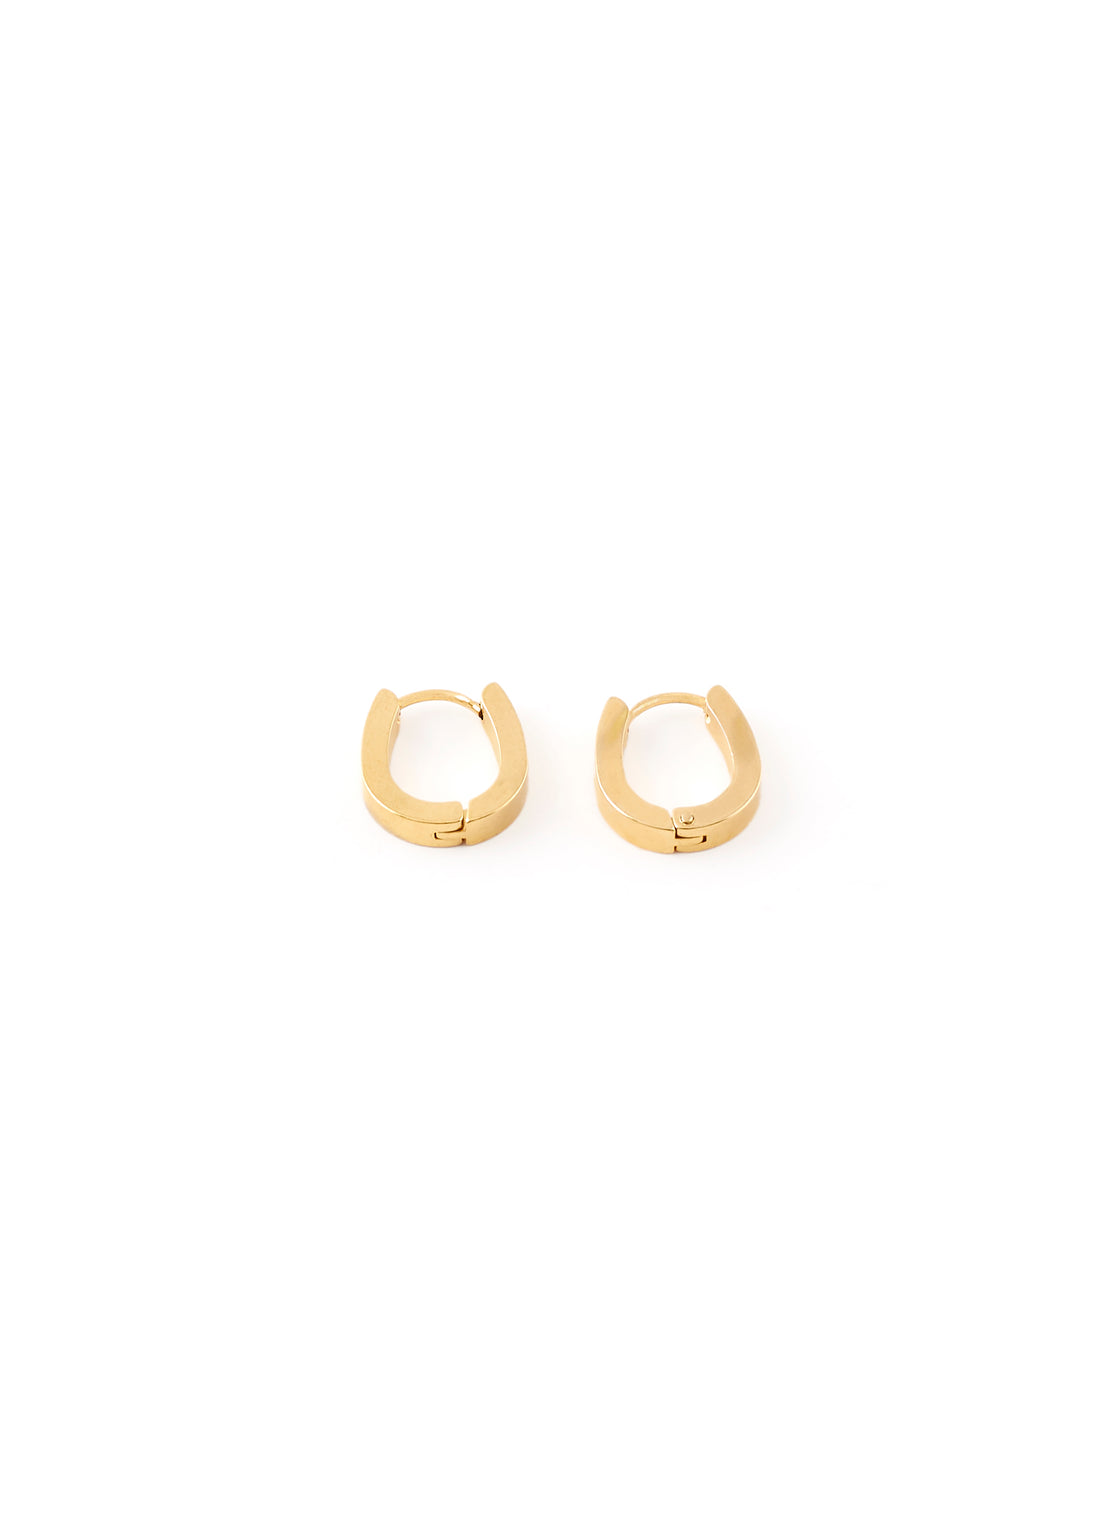 Gold Pear Shape Hoop Earrings - Jessimara